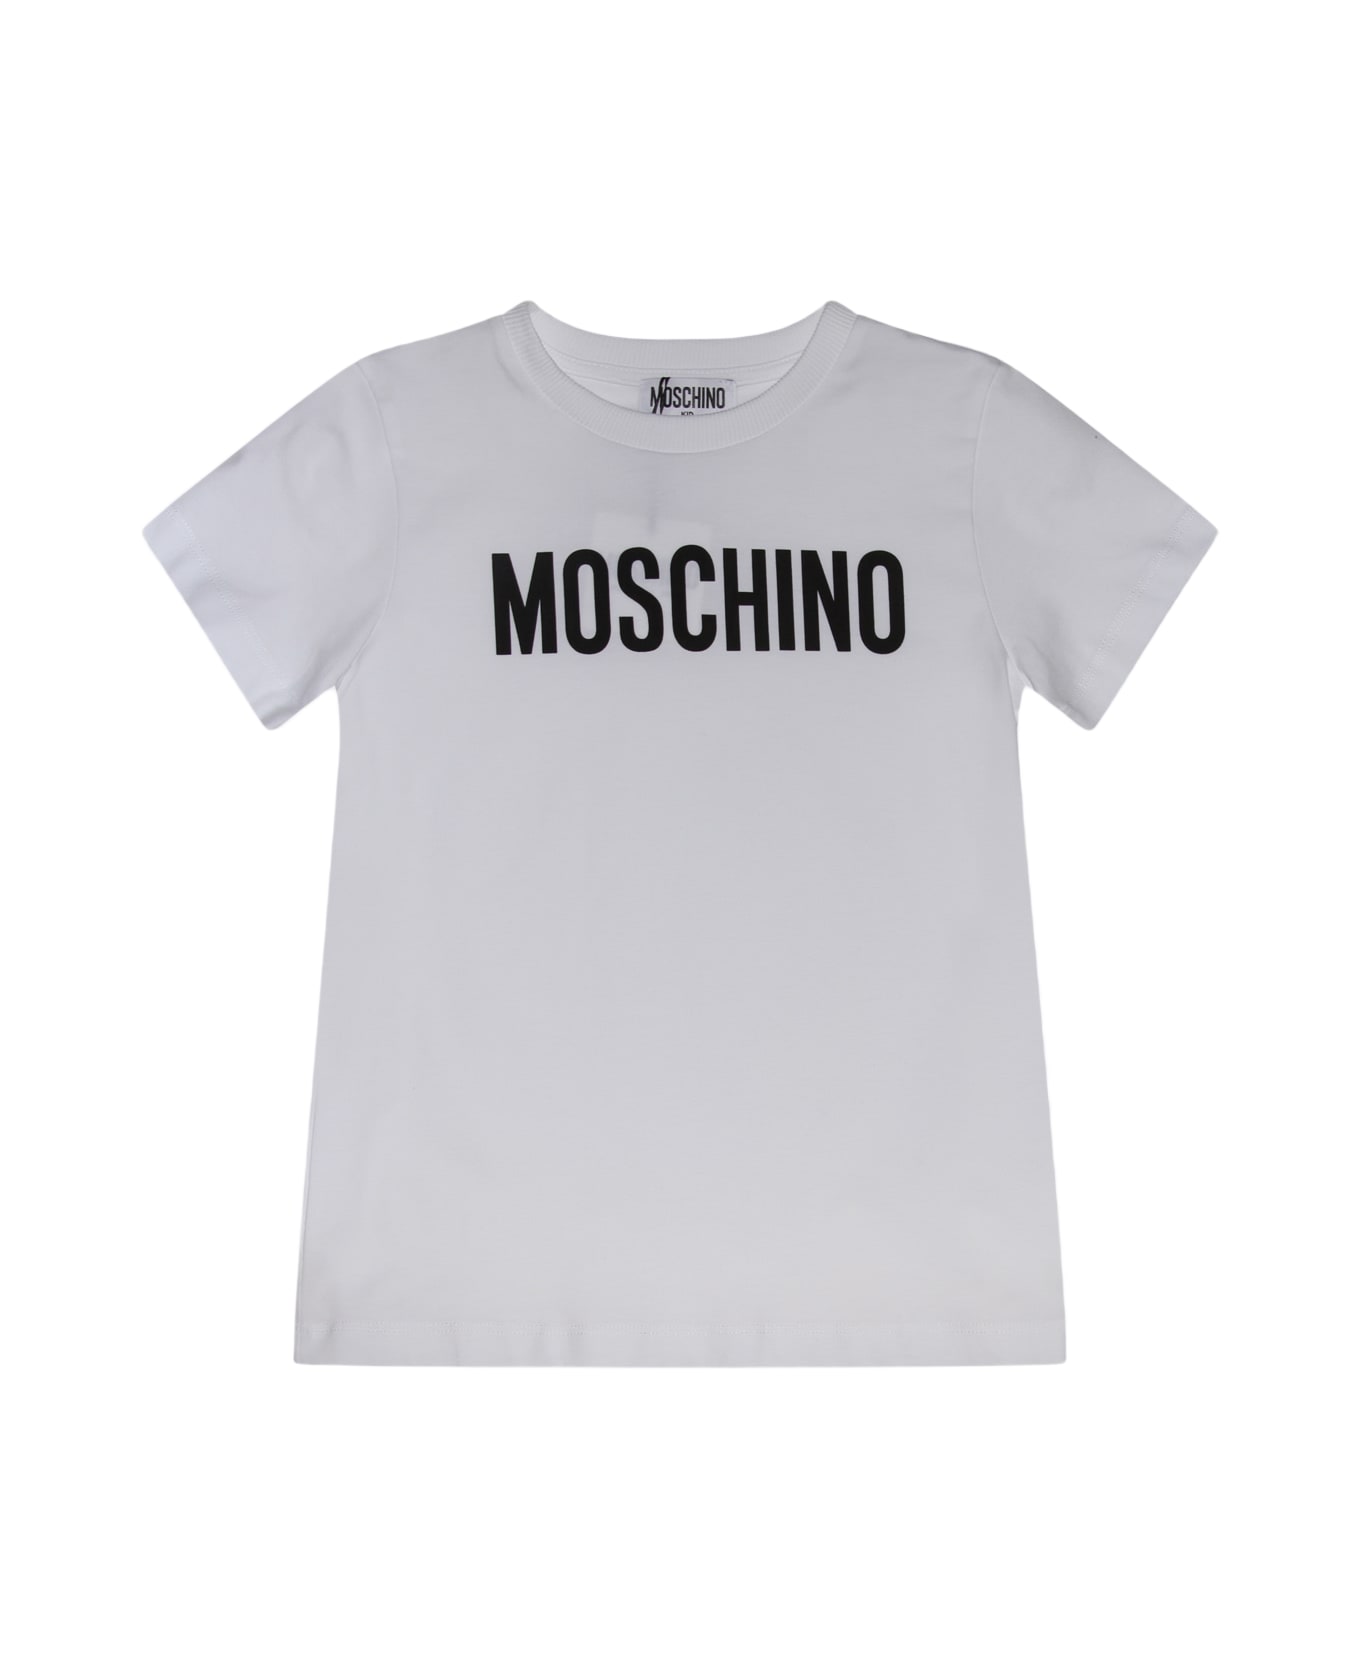 Moschino White And Black Cotton T-shirt - Bianco Ottico